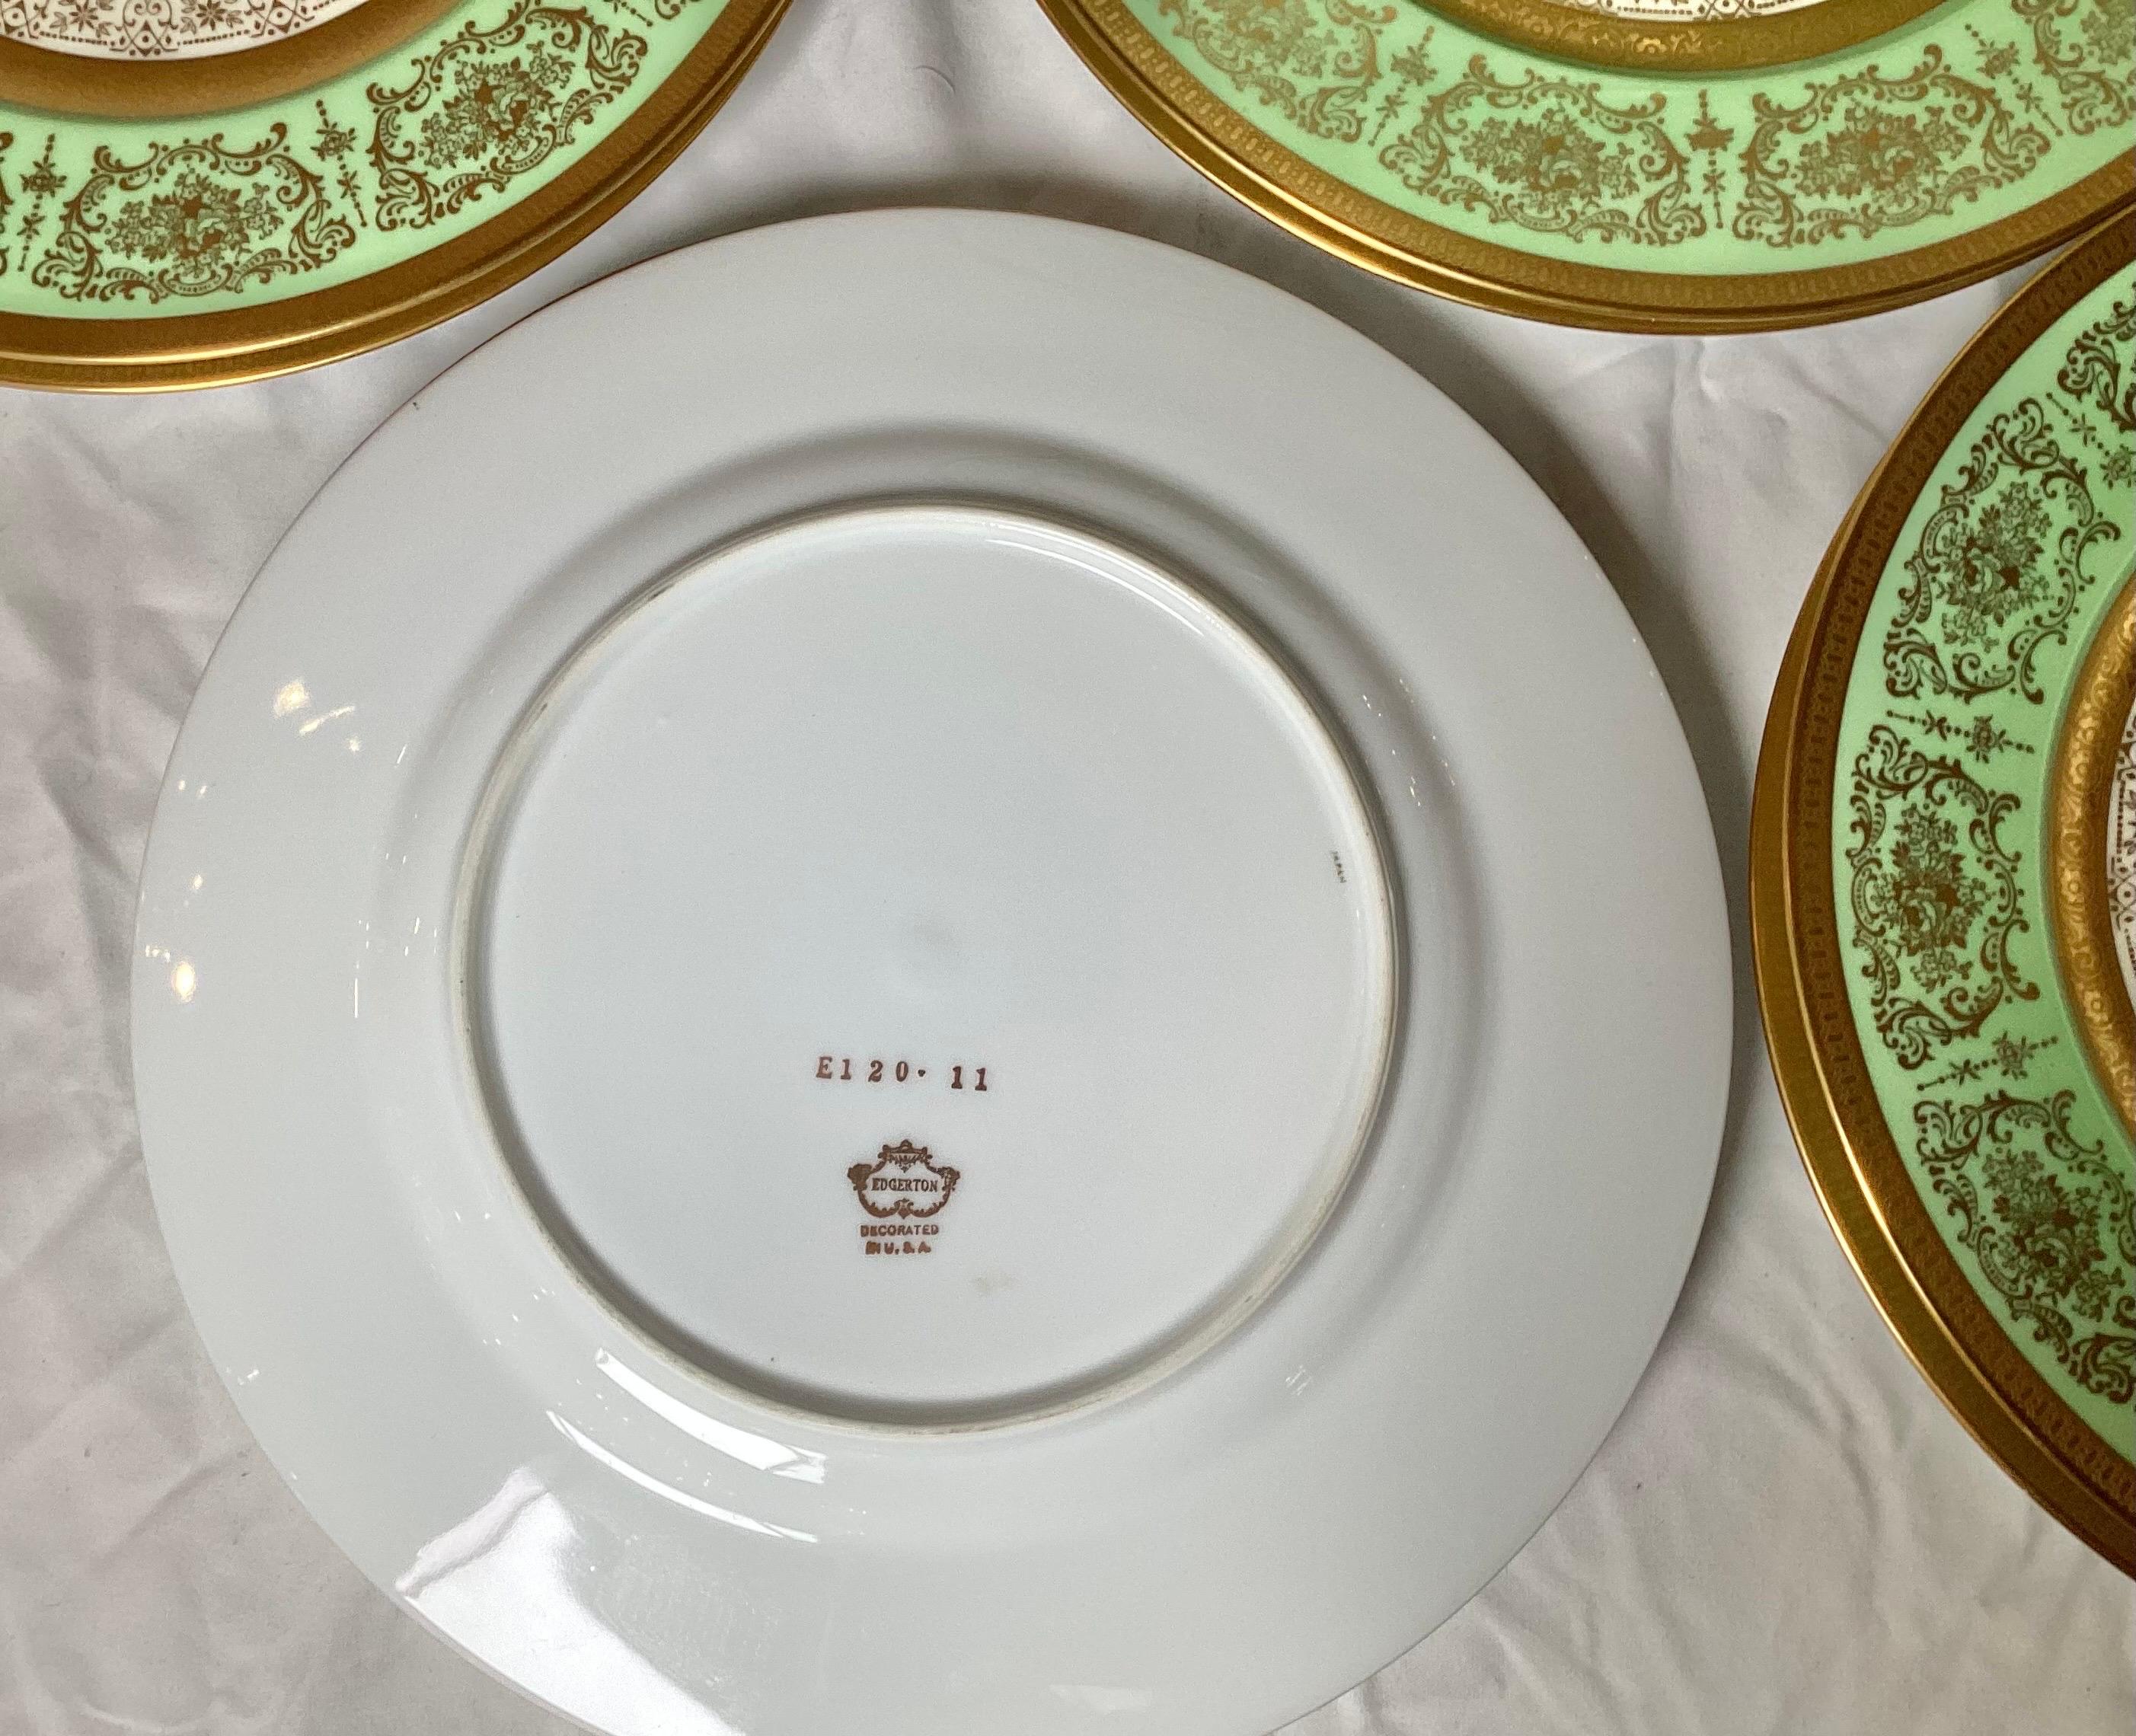 Elegant Set of 11 Apple Green and Gilt Service Plates 1